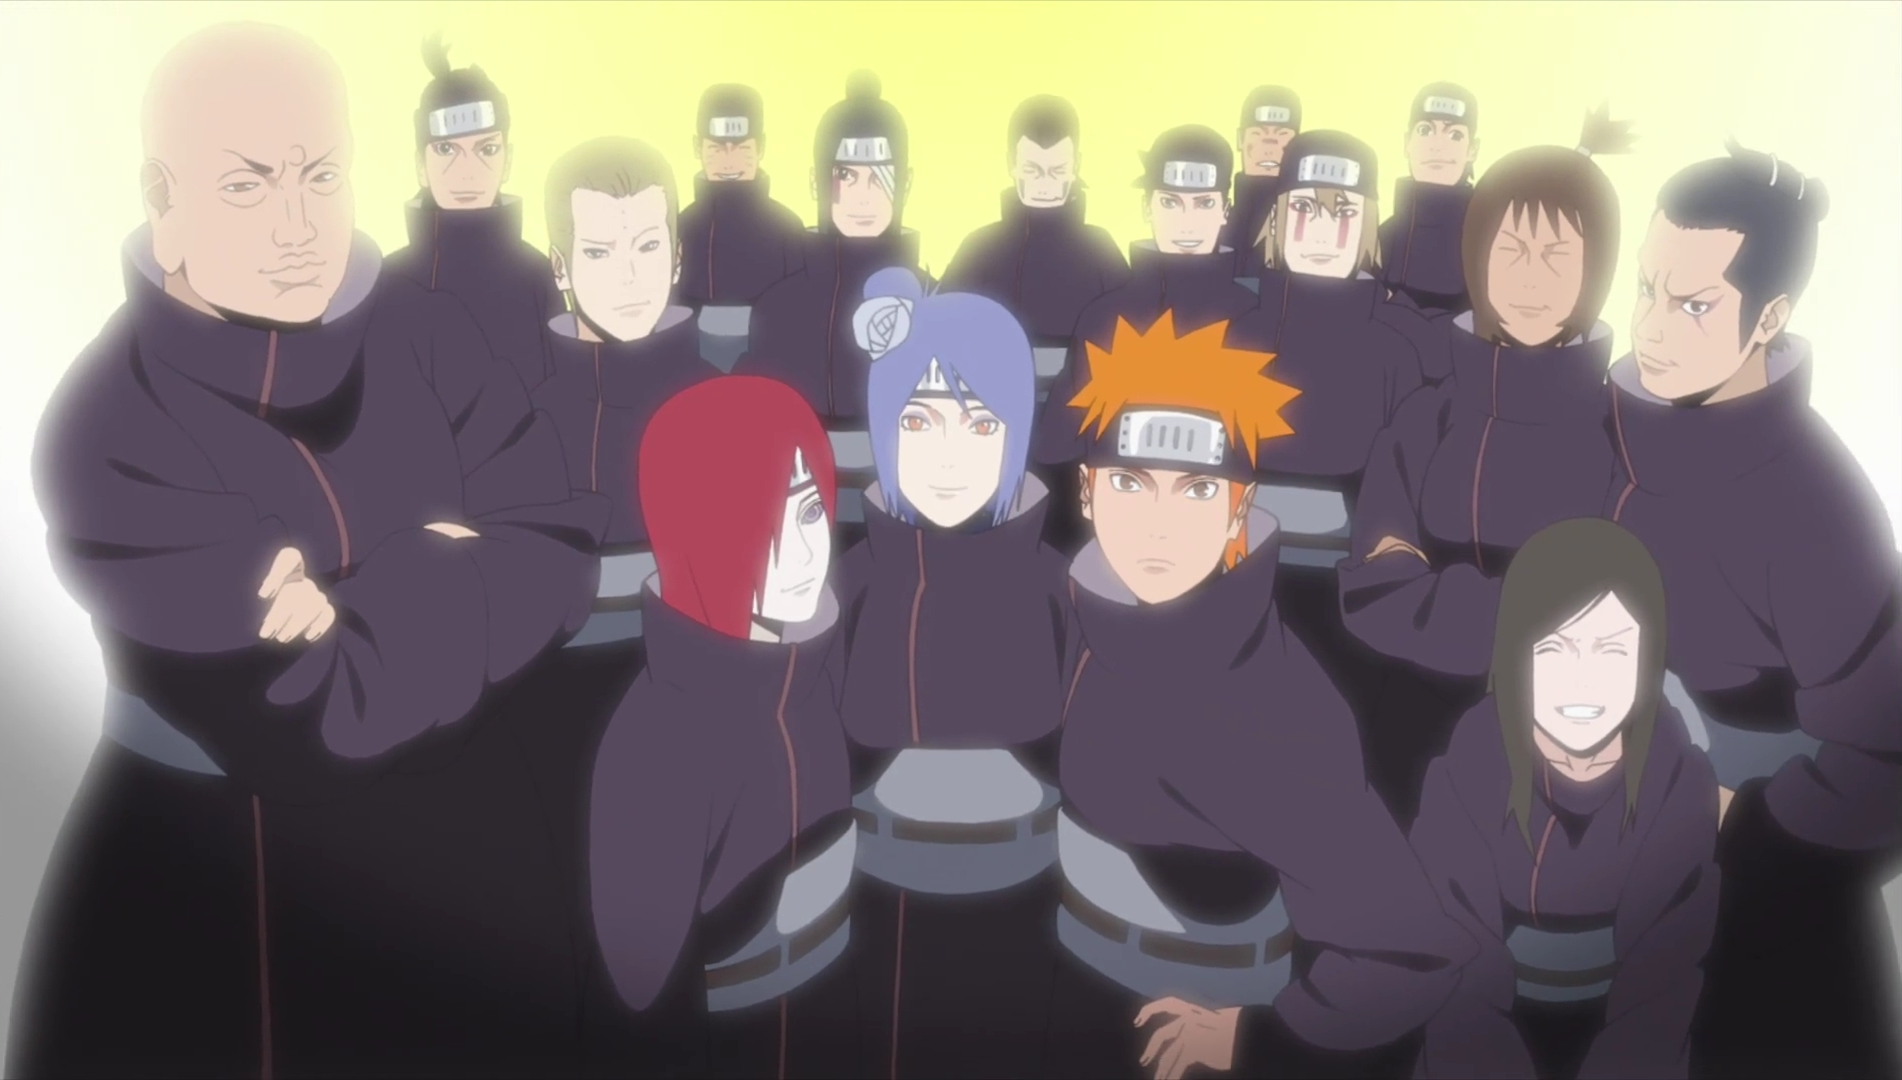 Akatsuki: todos os membros, a história e poderes de cada um | Naruto -  Aficionados